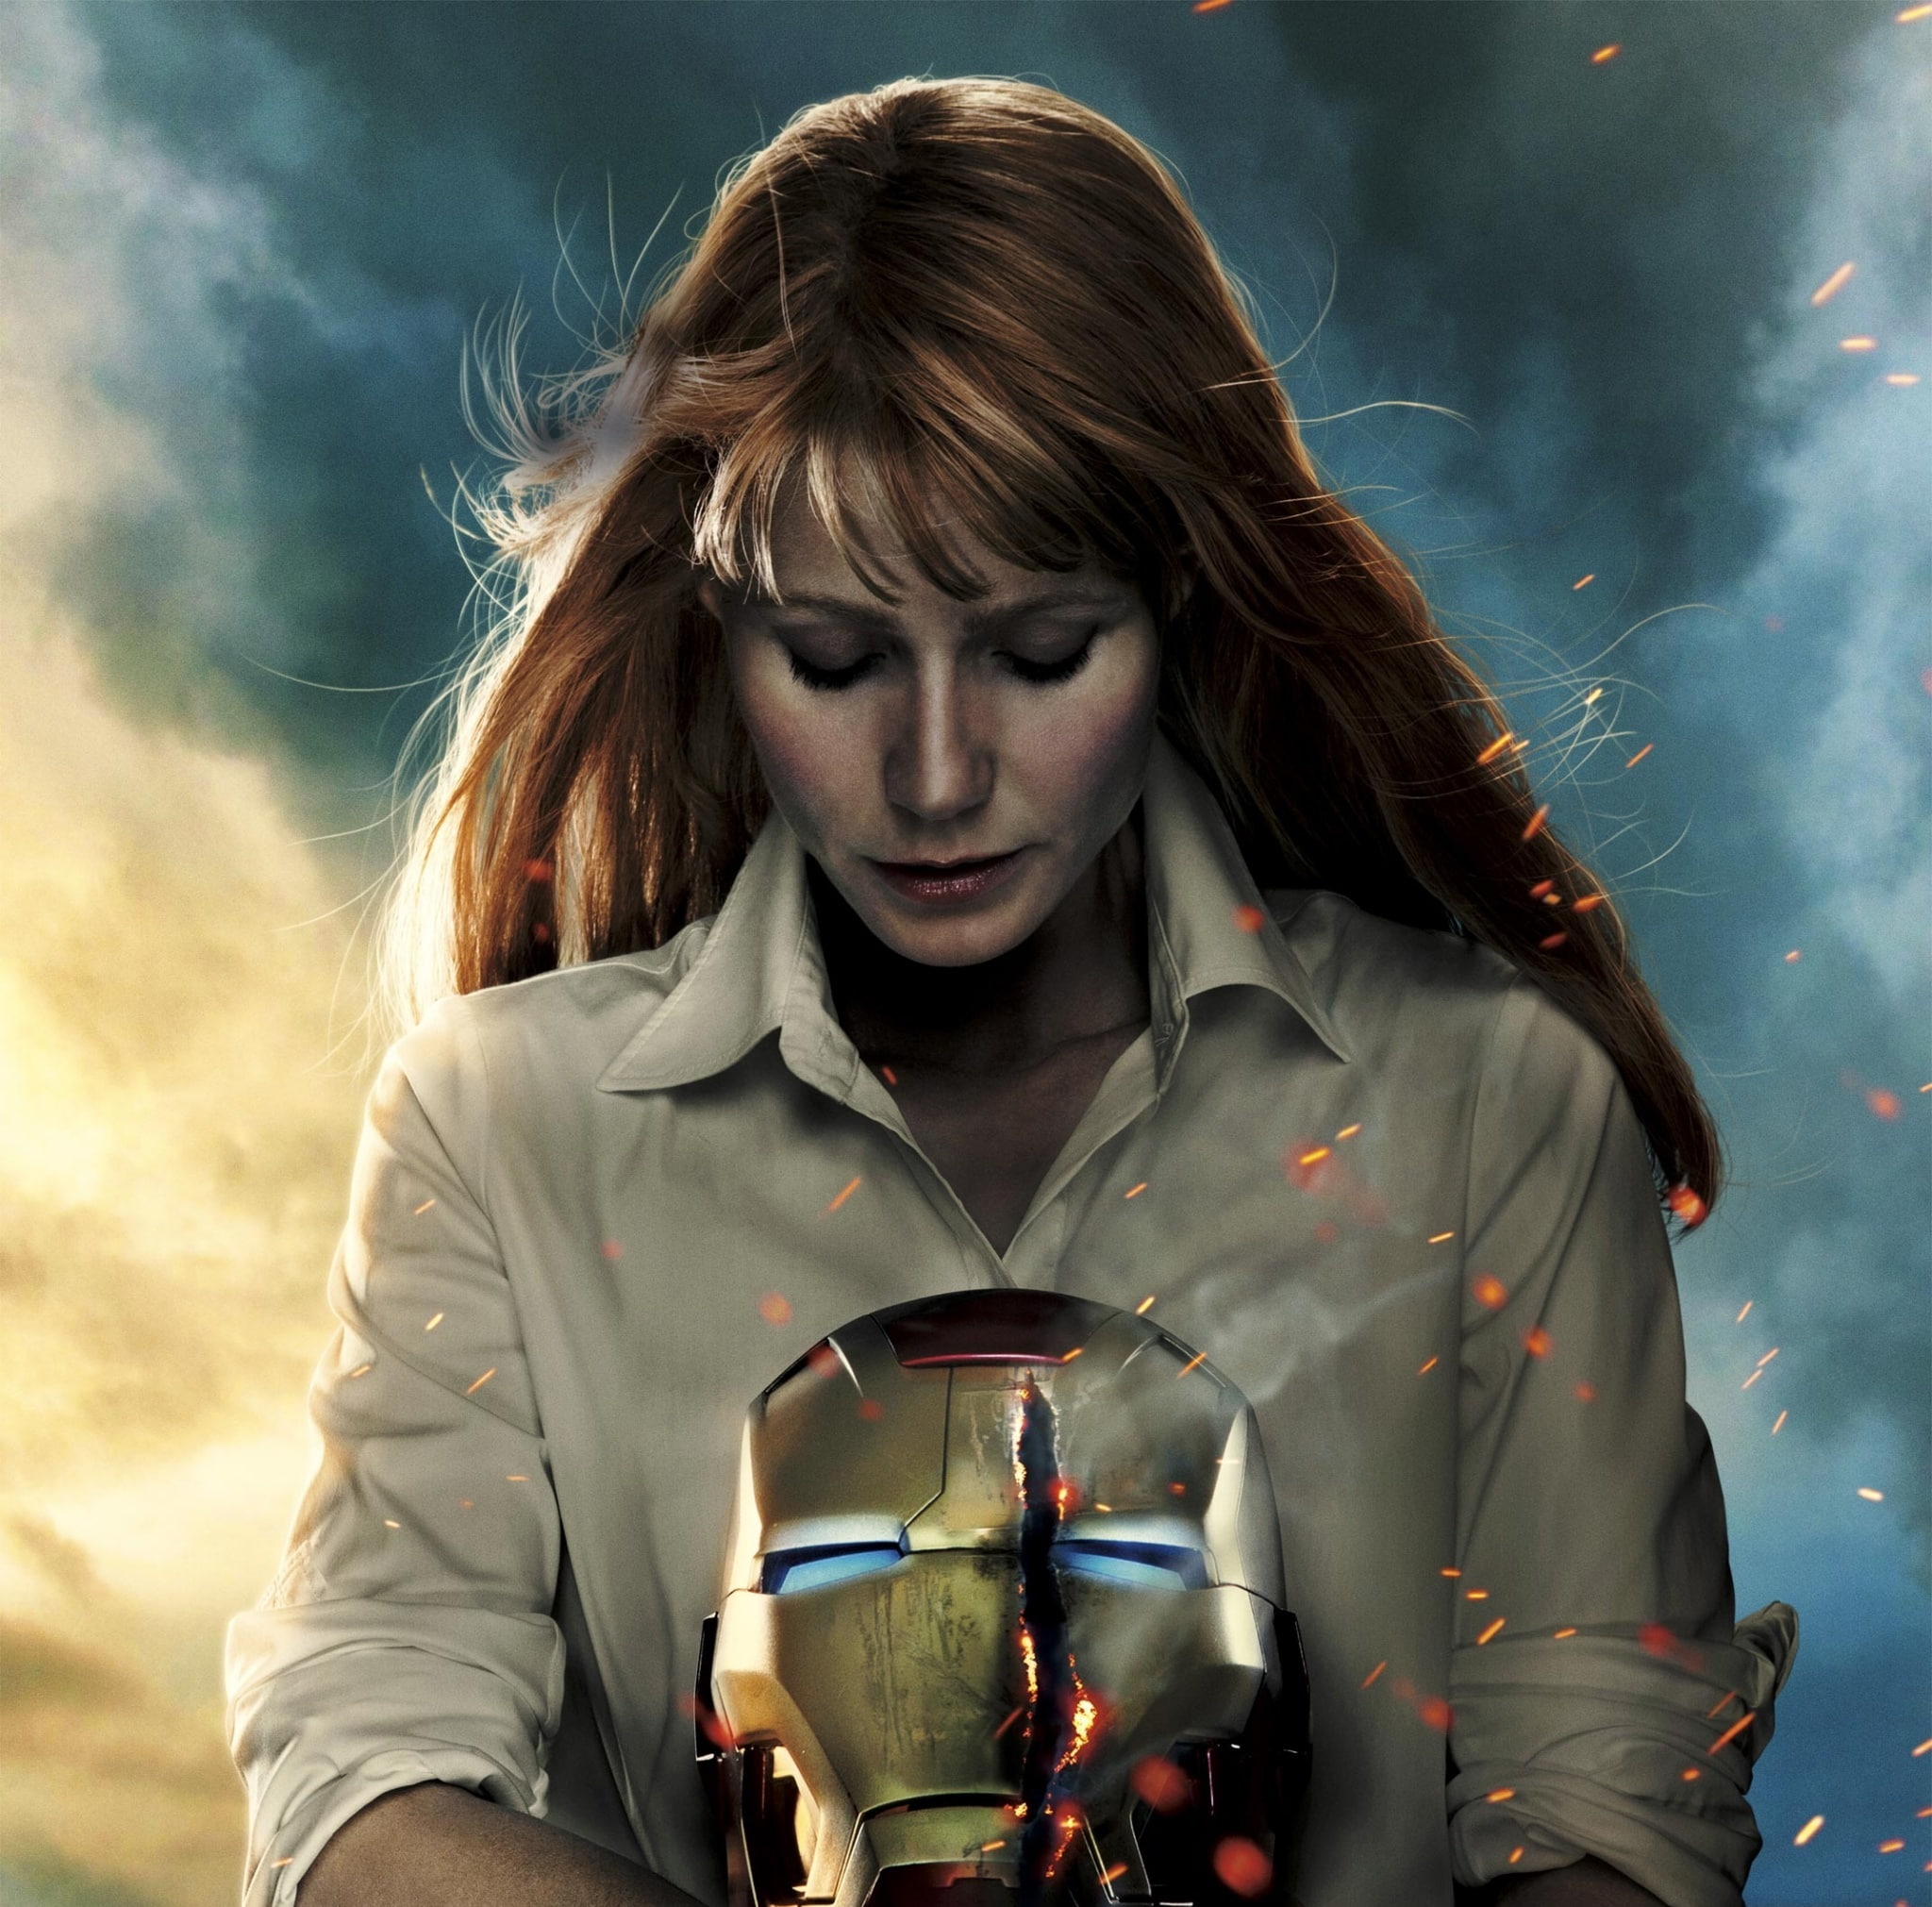 Free Download Hd Wallpaper Iron Man 3 Pepper Potts Suit Gwyneth Paltrow Movies Film 2013 